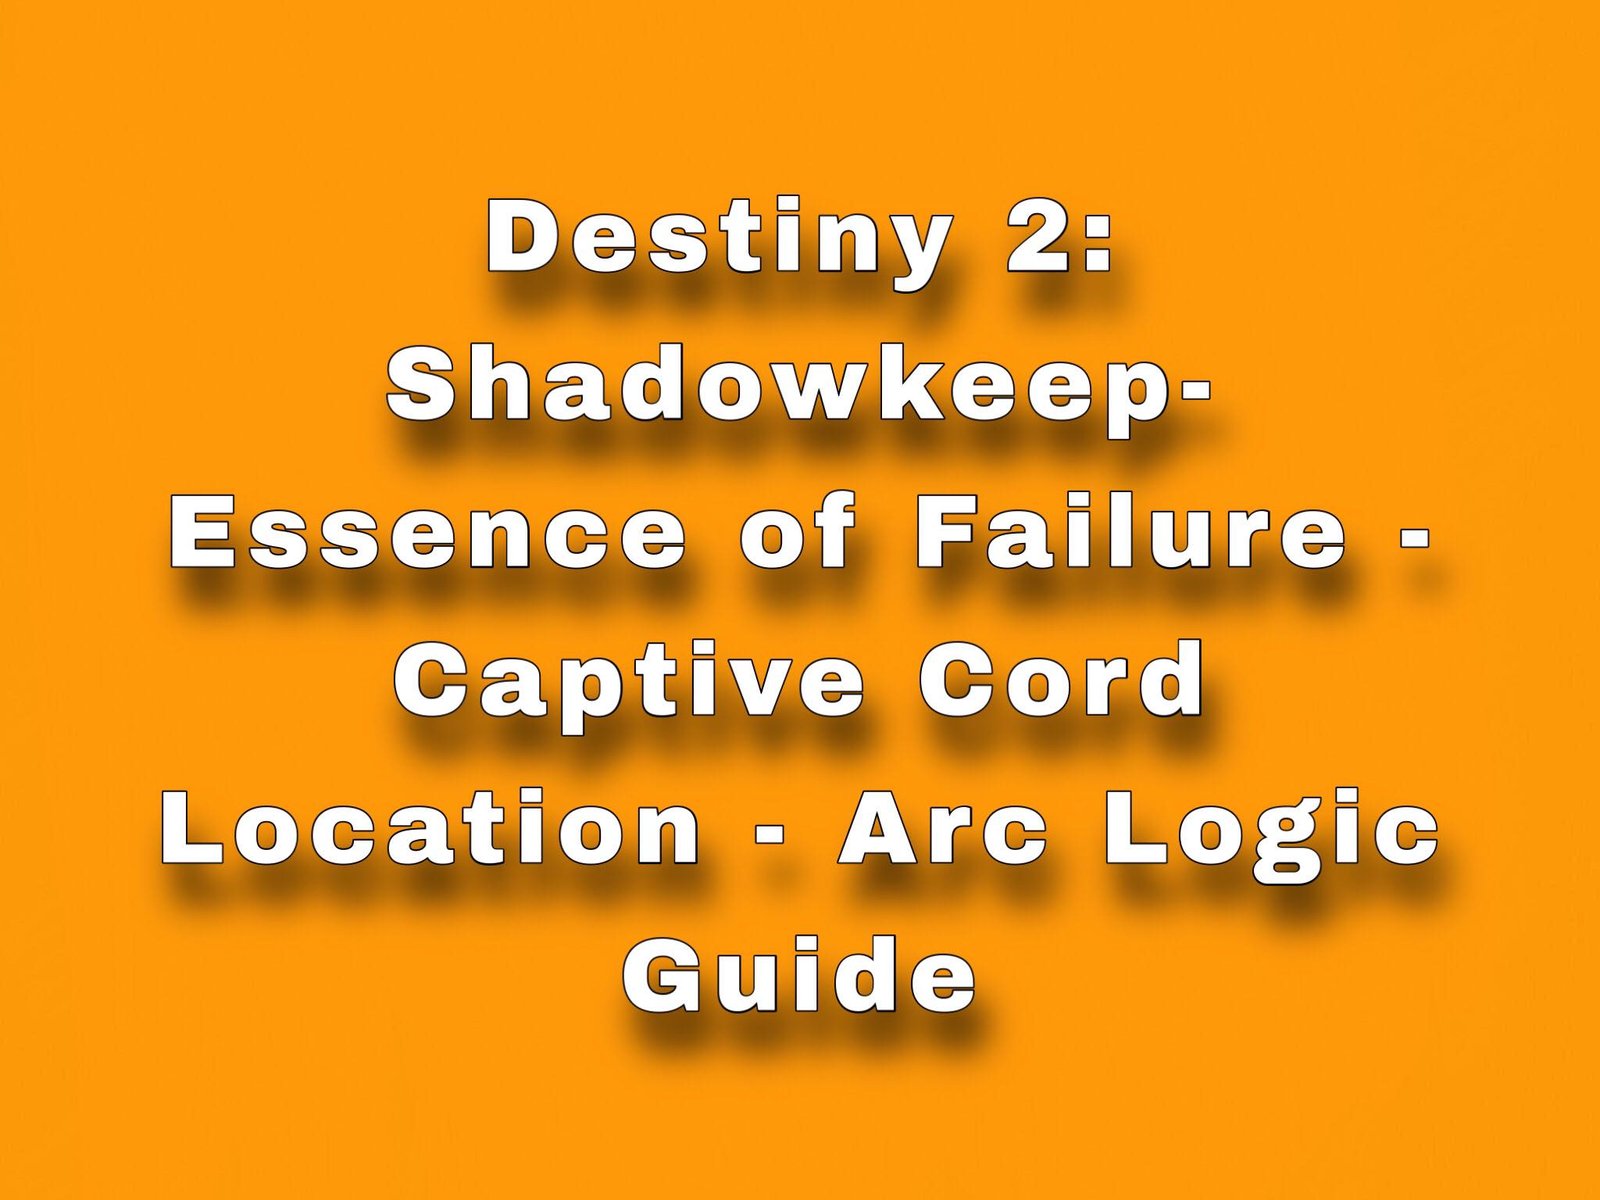 Destiny 2 Essence of Failure - Captive Cord Location